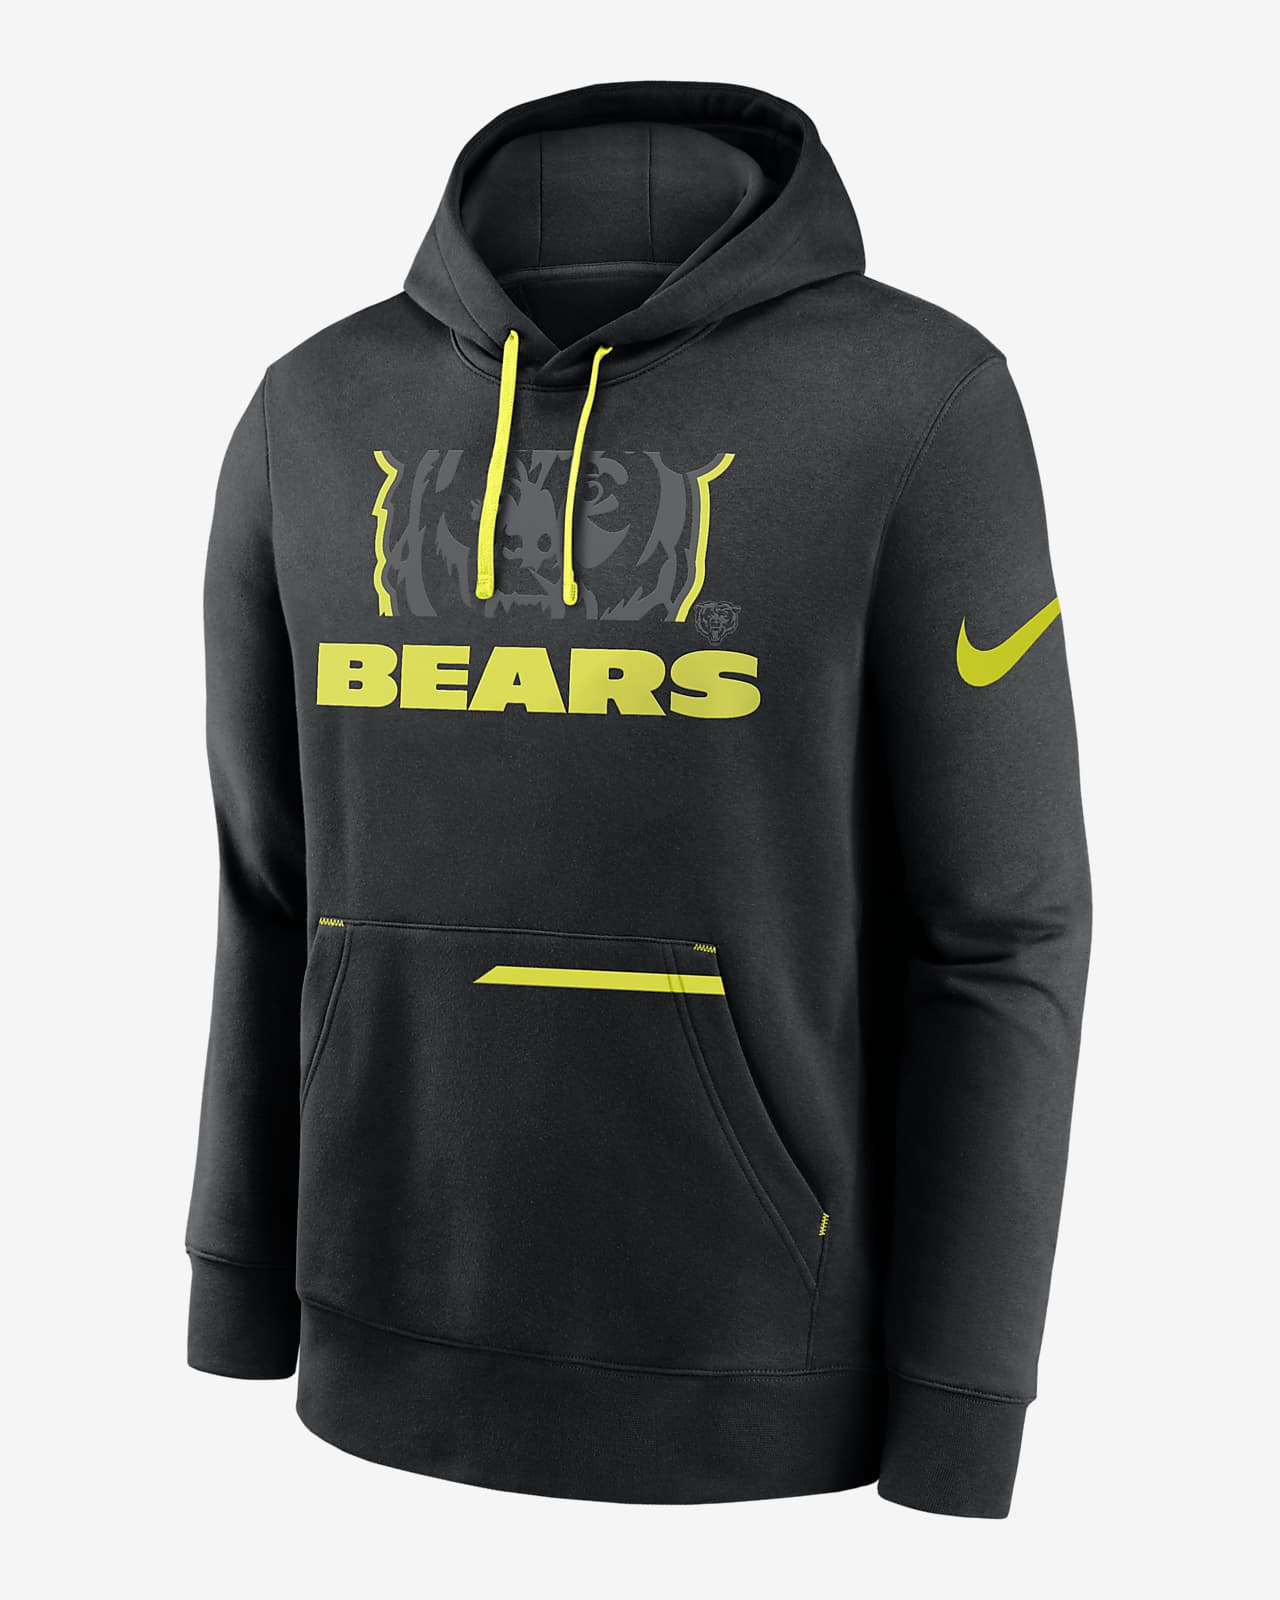 Men's Nike Black Chicago Bears Volt Pullover Hoodie